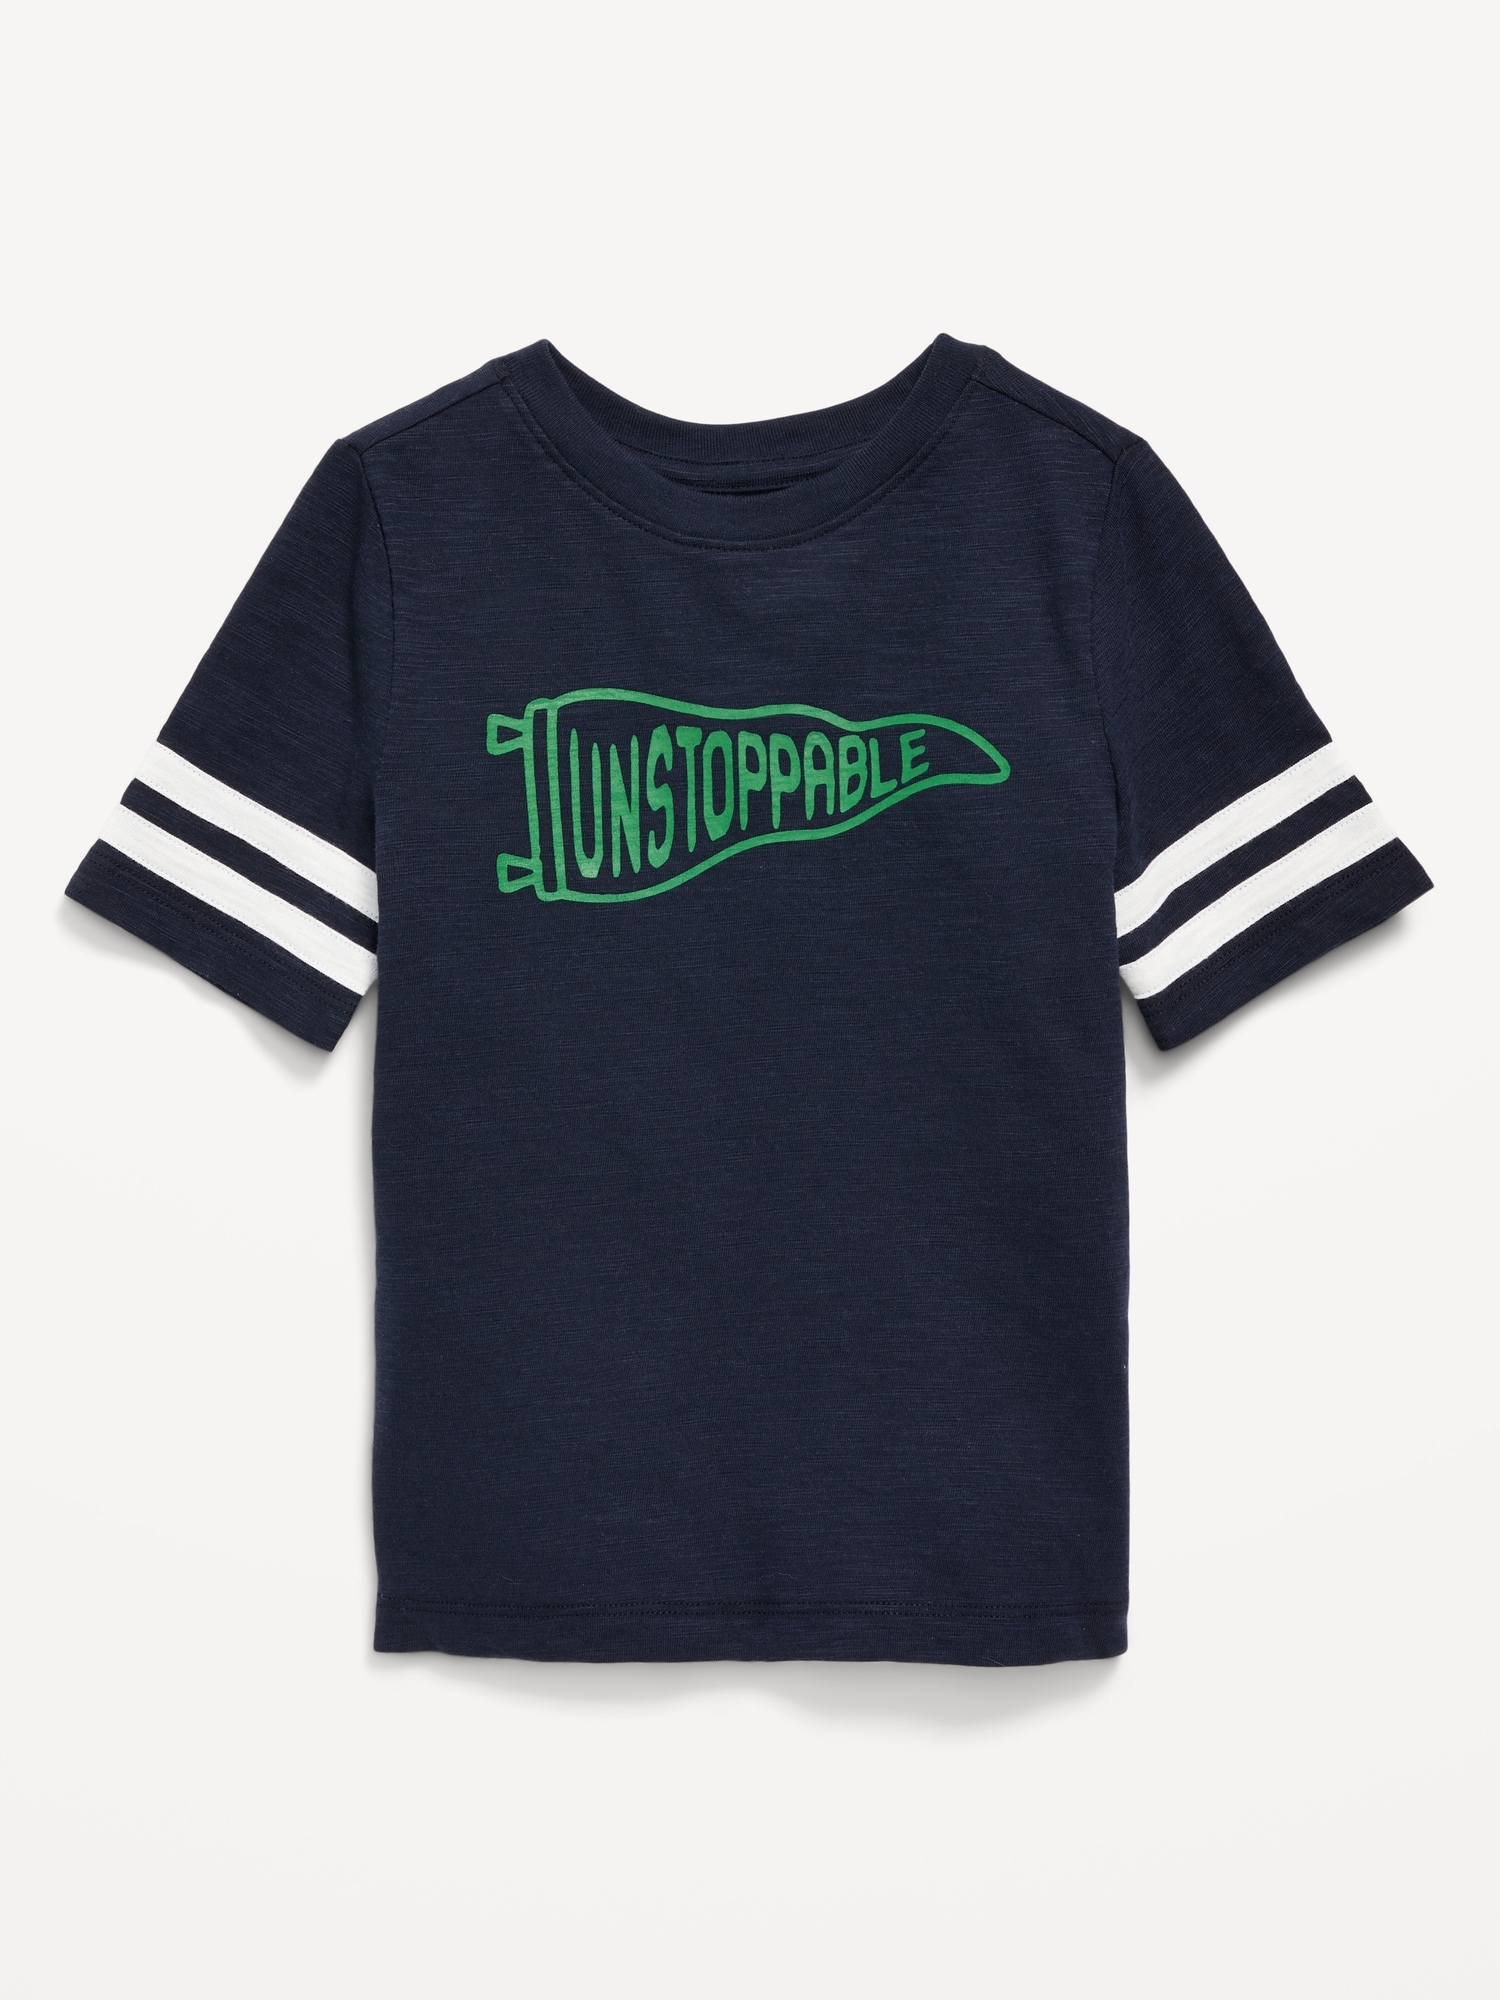 Short-Sleeve Stripe Graphic T-Shirt for Toddler Boys